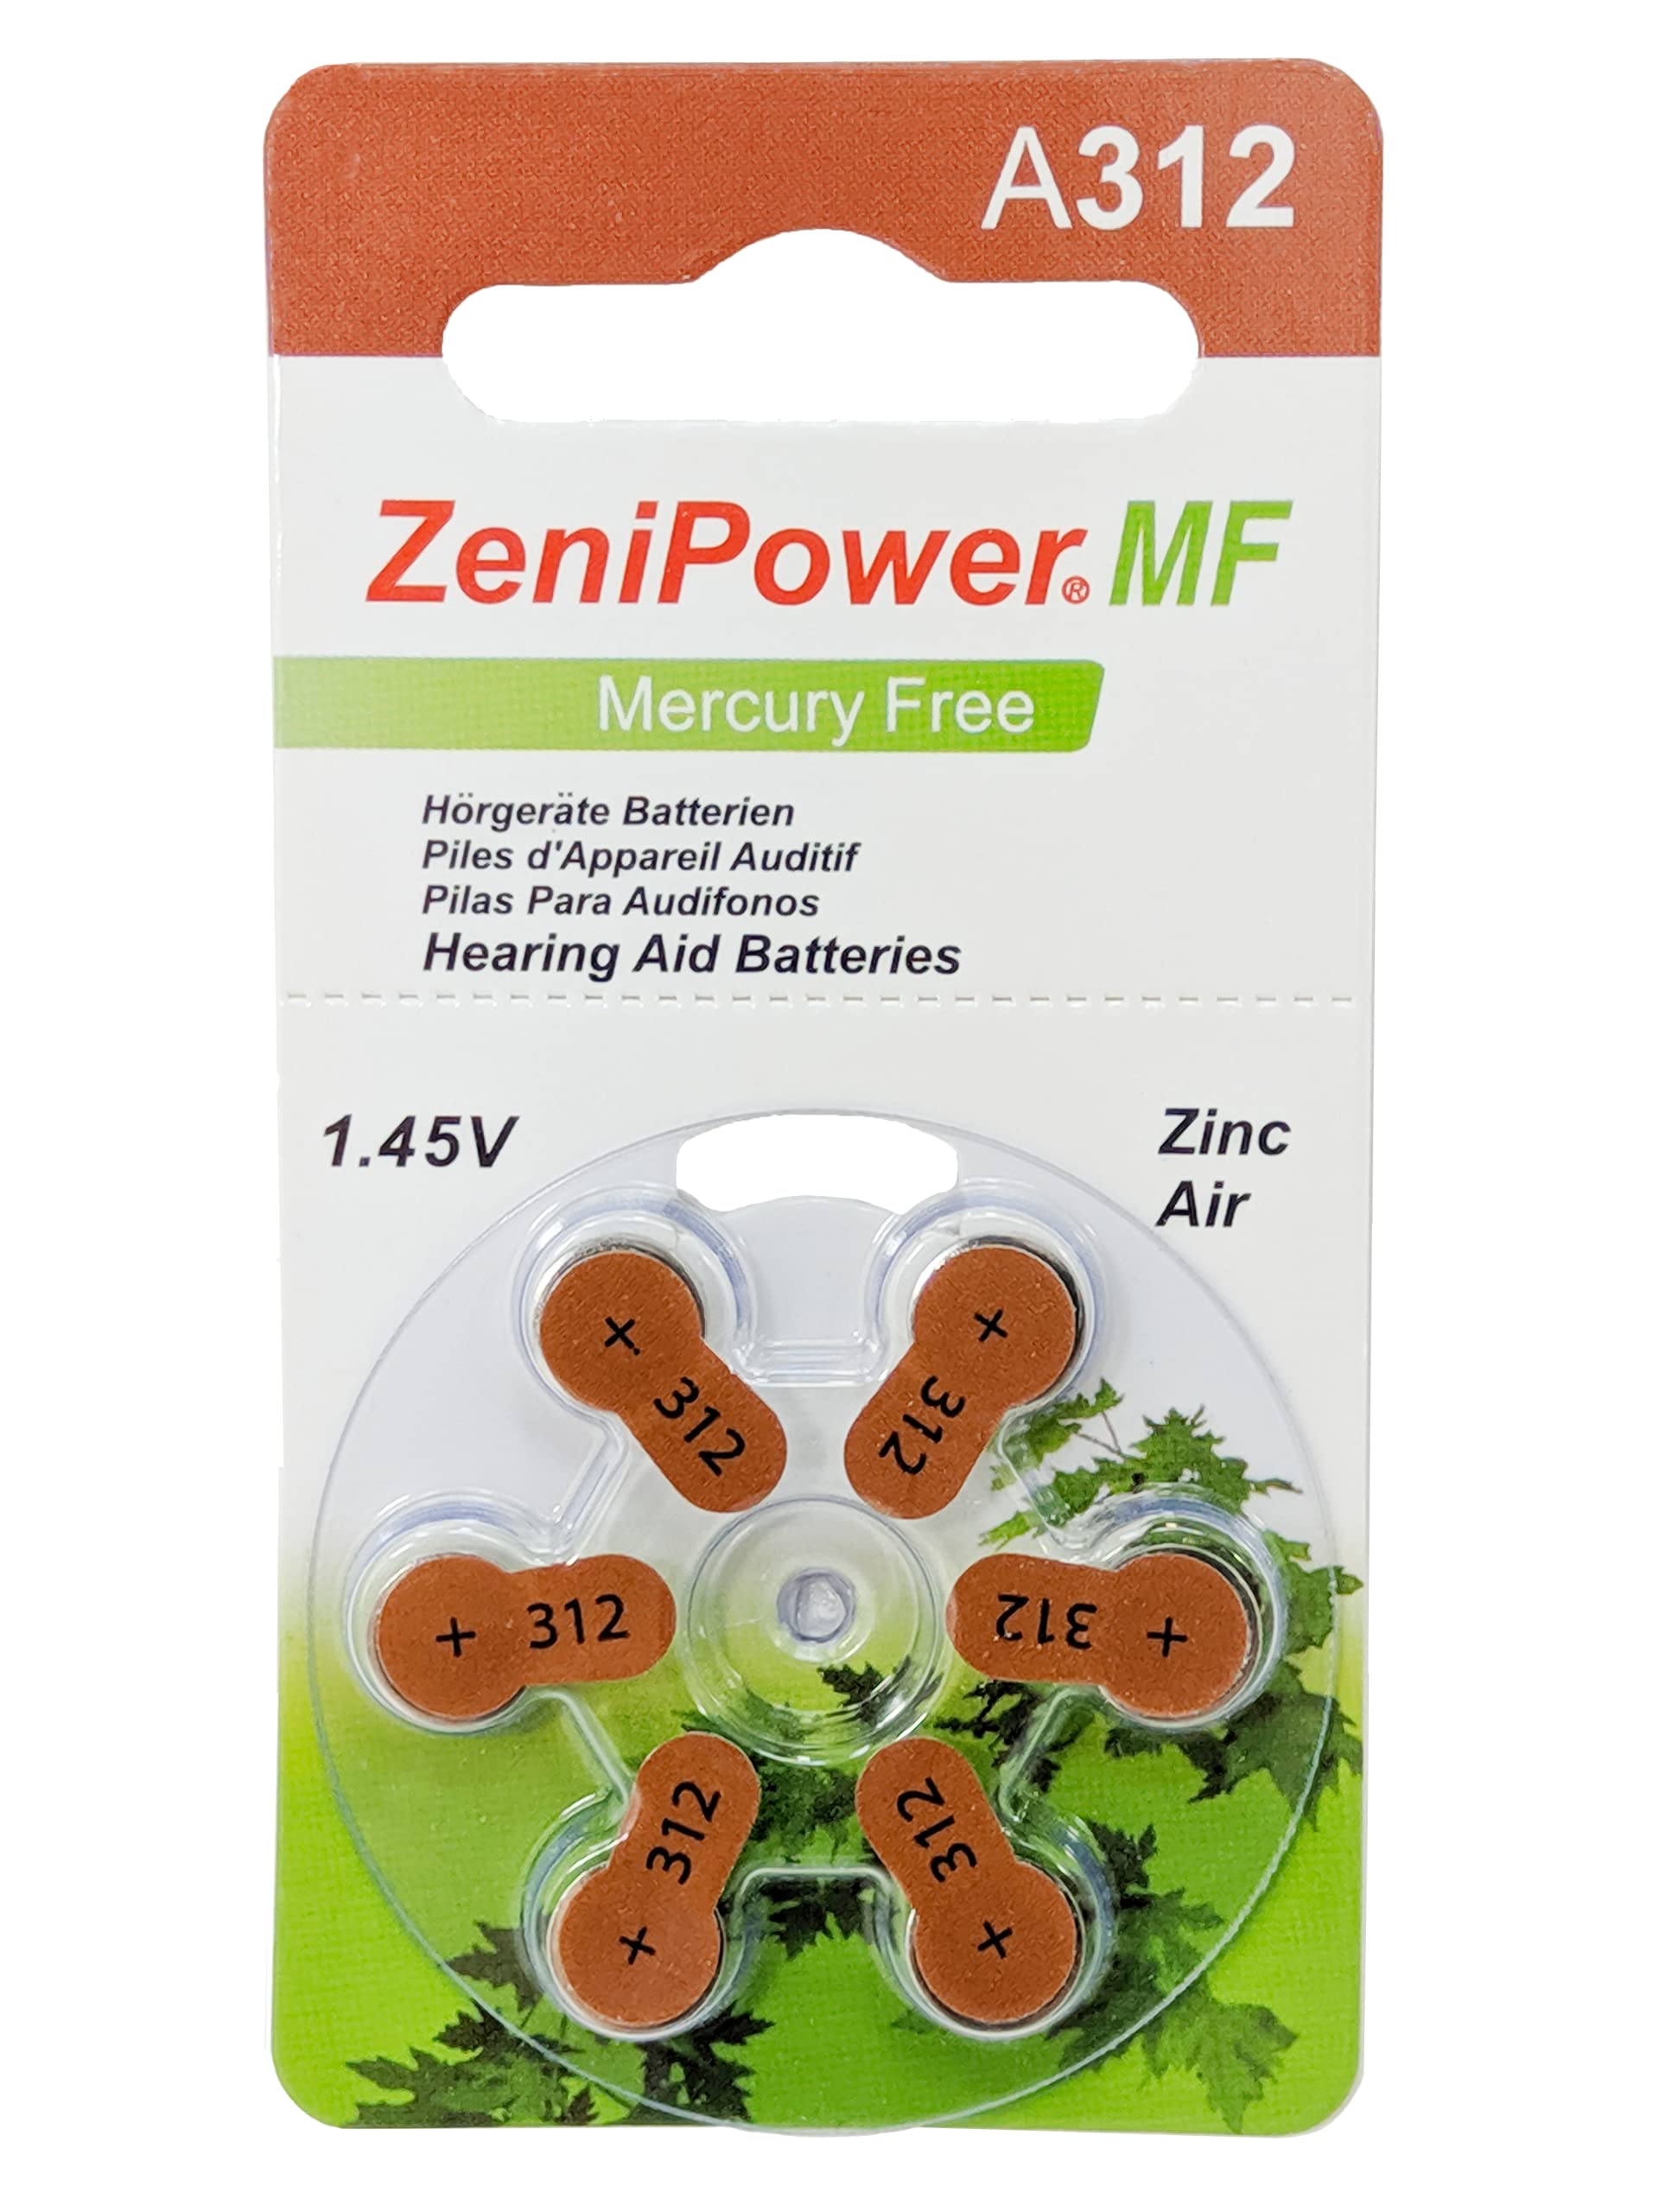 Набор батареек ZeniPower для слуховых аппаратов, тип 312 набор батареек для слуховых аппаратов duracell activair тип 312